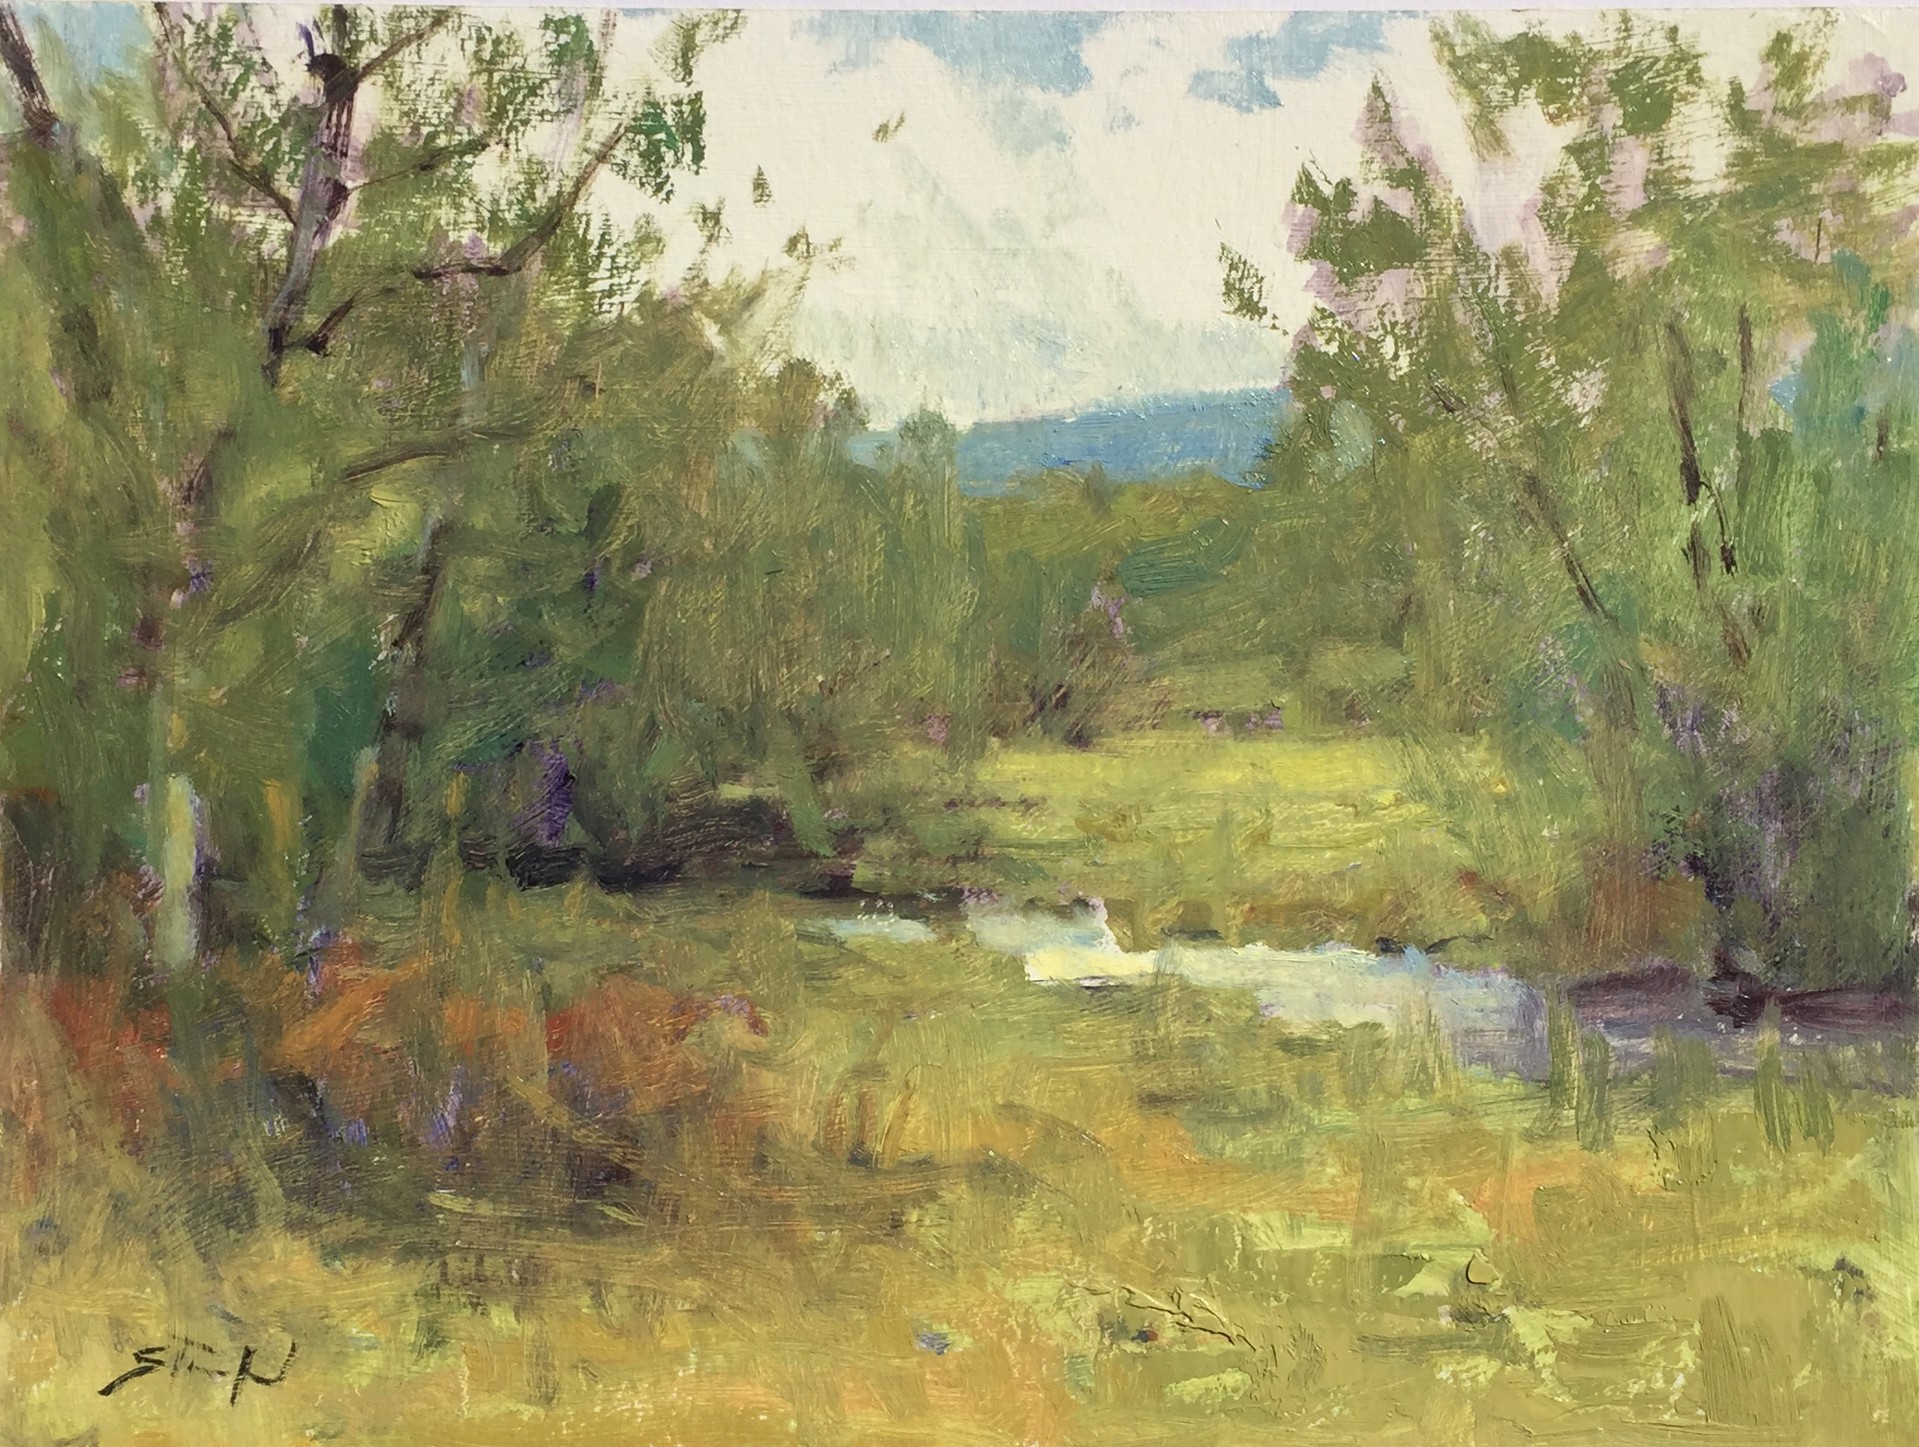 Cold Creek by John Stanford